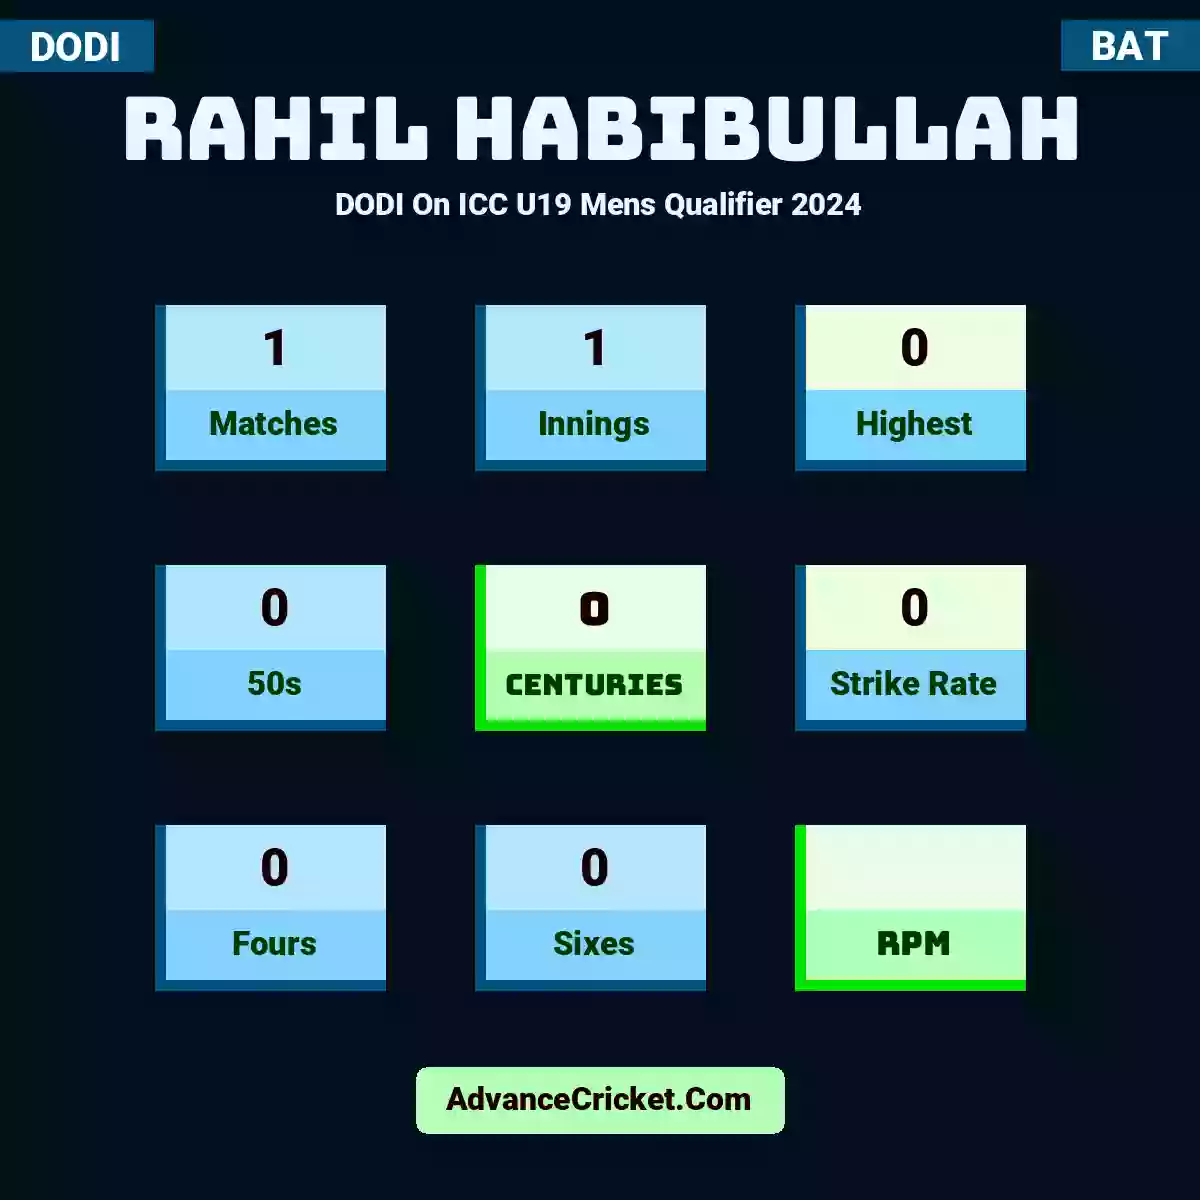 Rahil Habibullah DODI  On ICC U19 Mens Qualifier 2024, Rahil Habibullah played 1 matches, scored 0 runs as highest, 0 half-centuries, and 0 centuries, with a strike rate of 0. R.Habibullah hit 0 fours and 0 sixes.